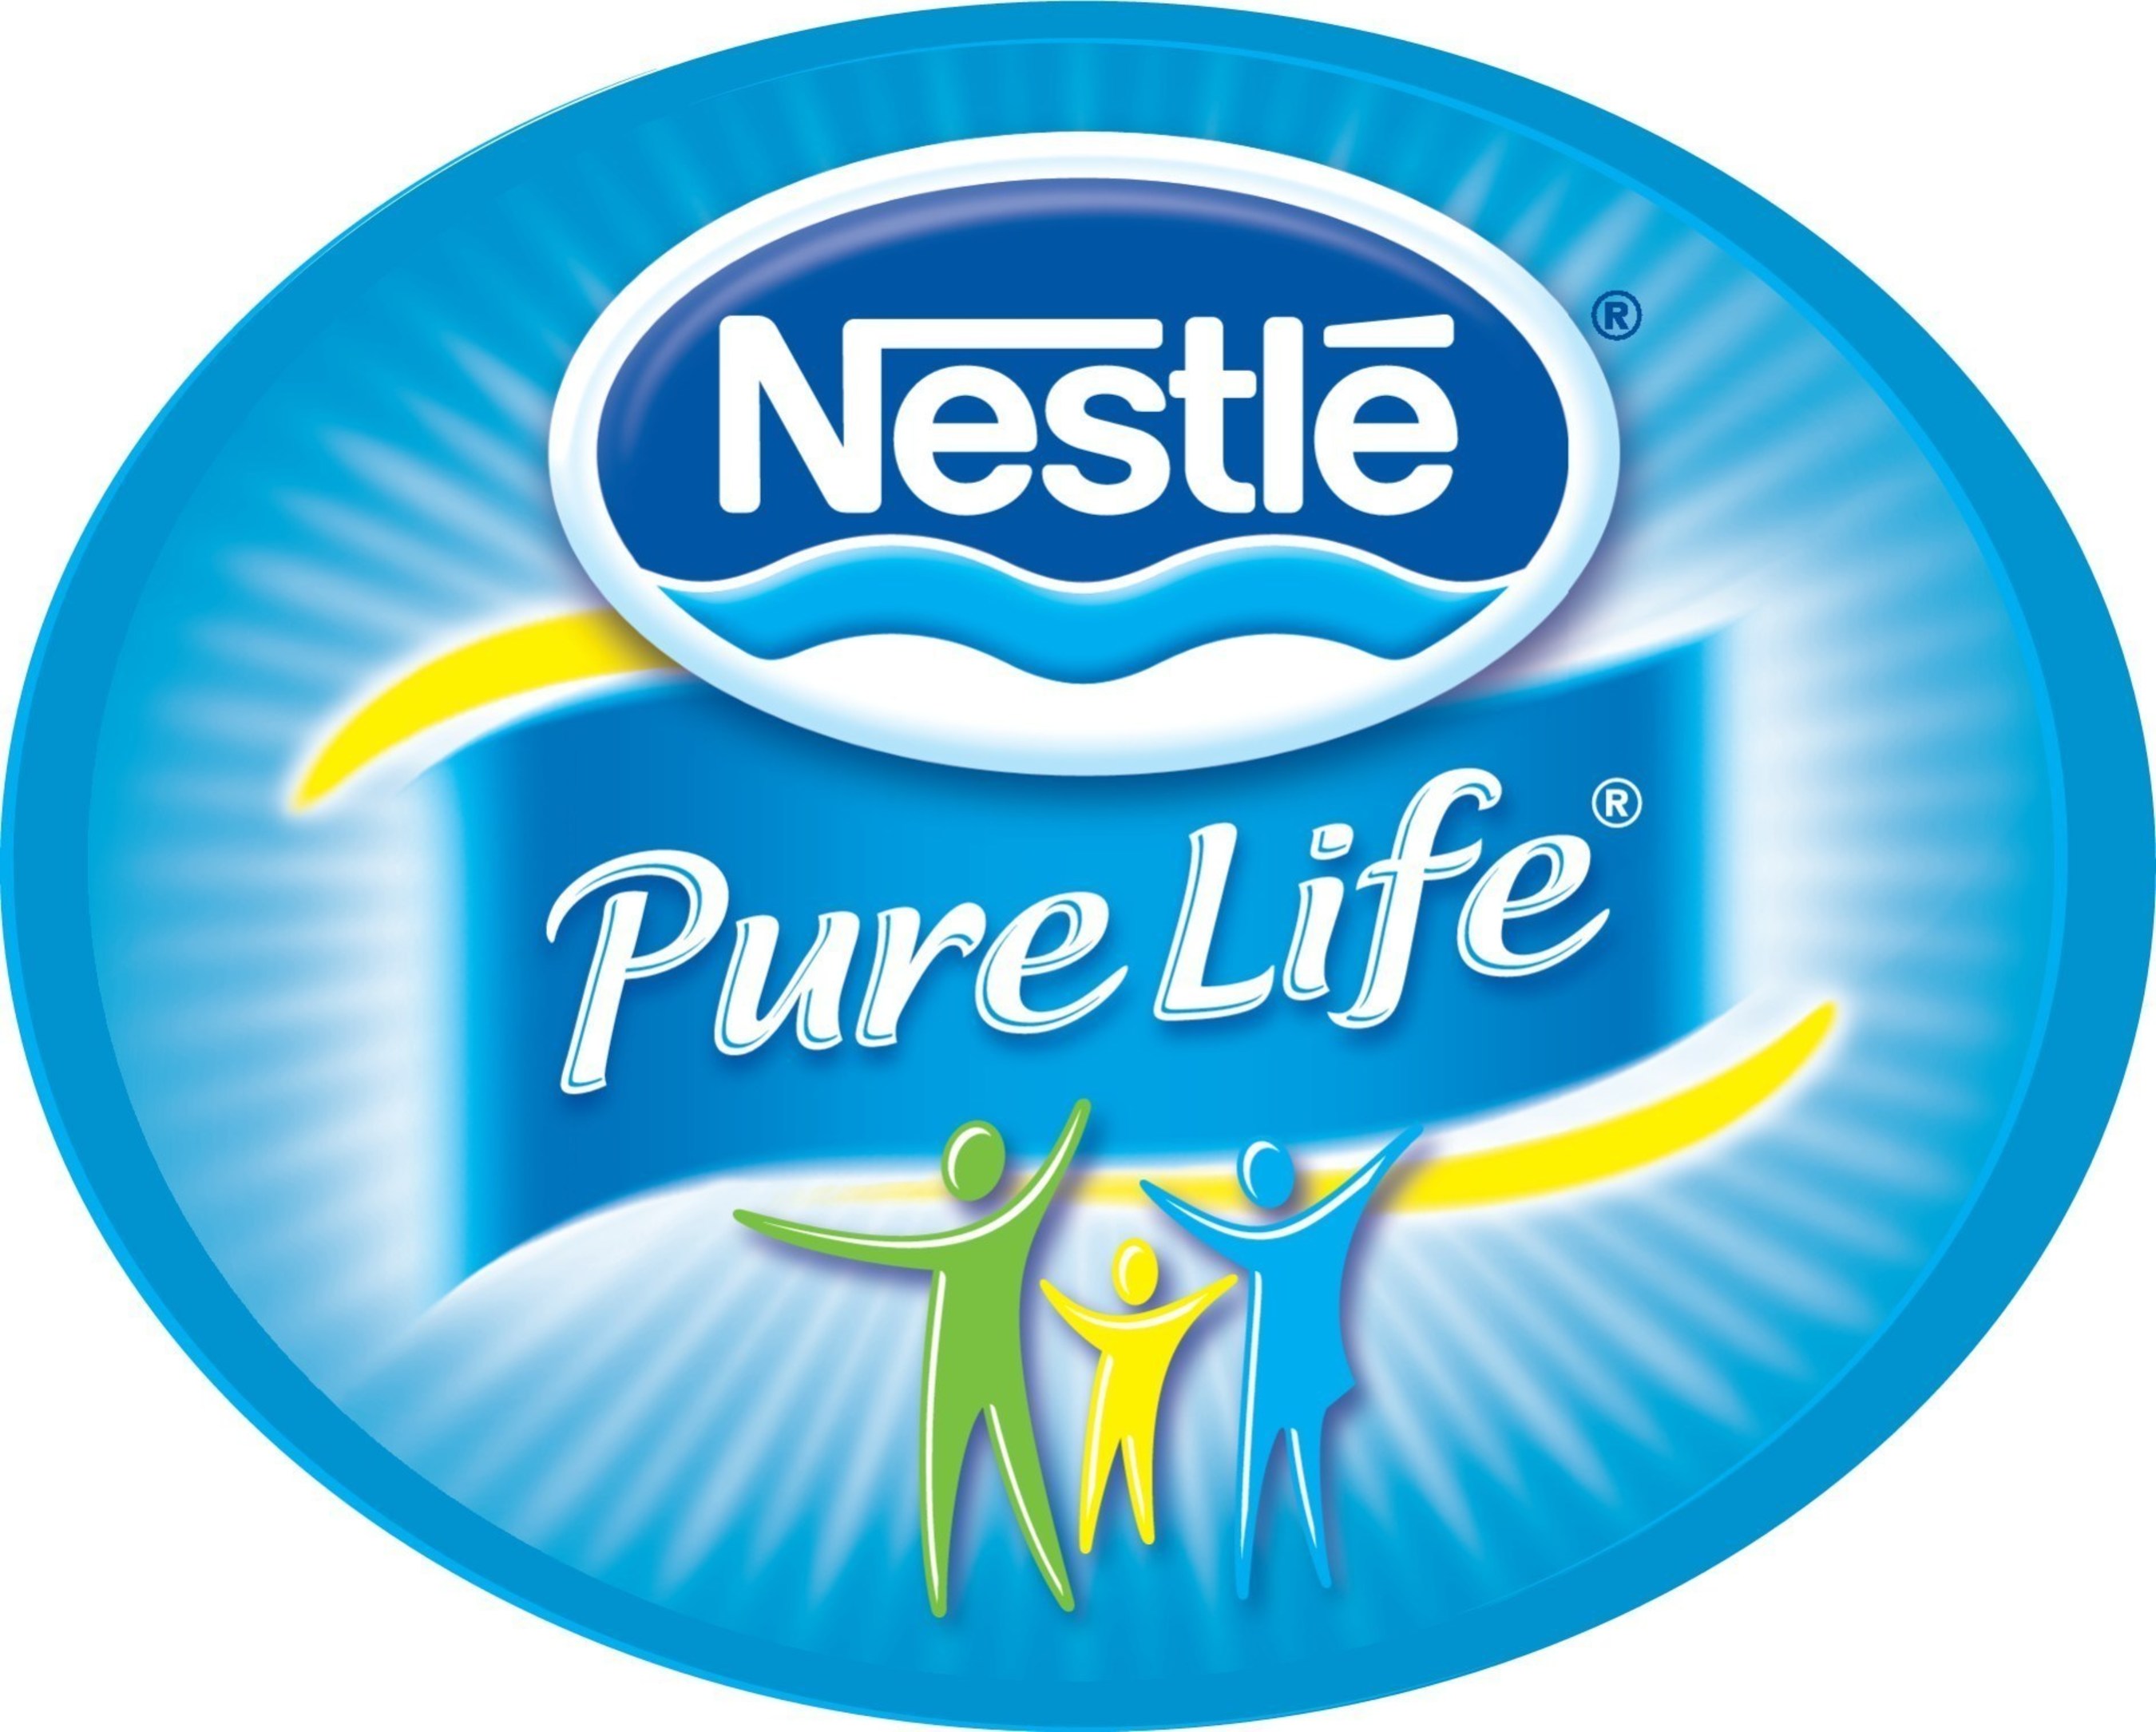 nestle water logo